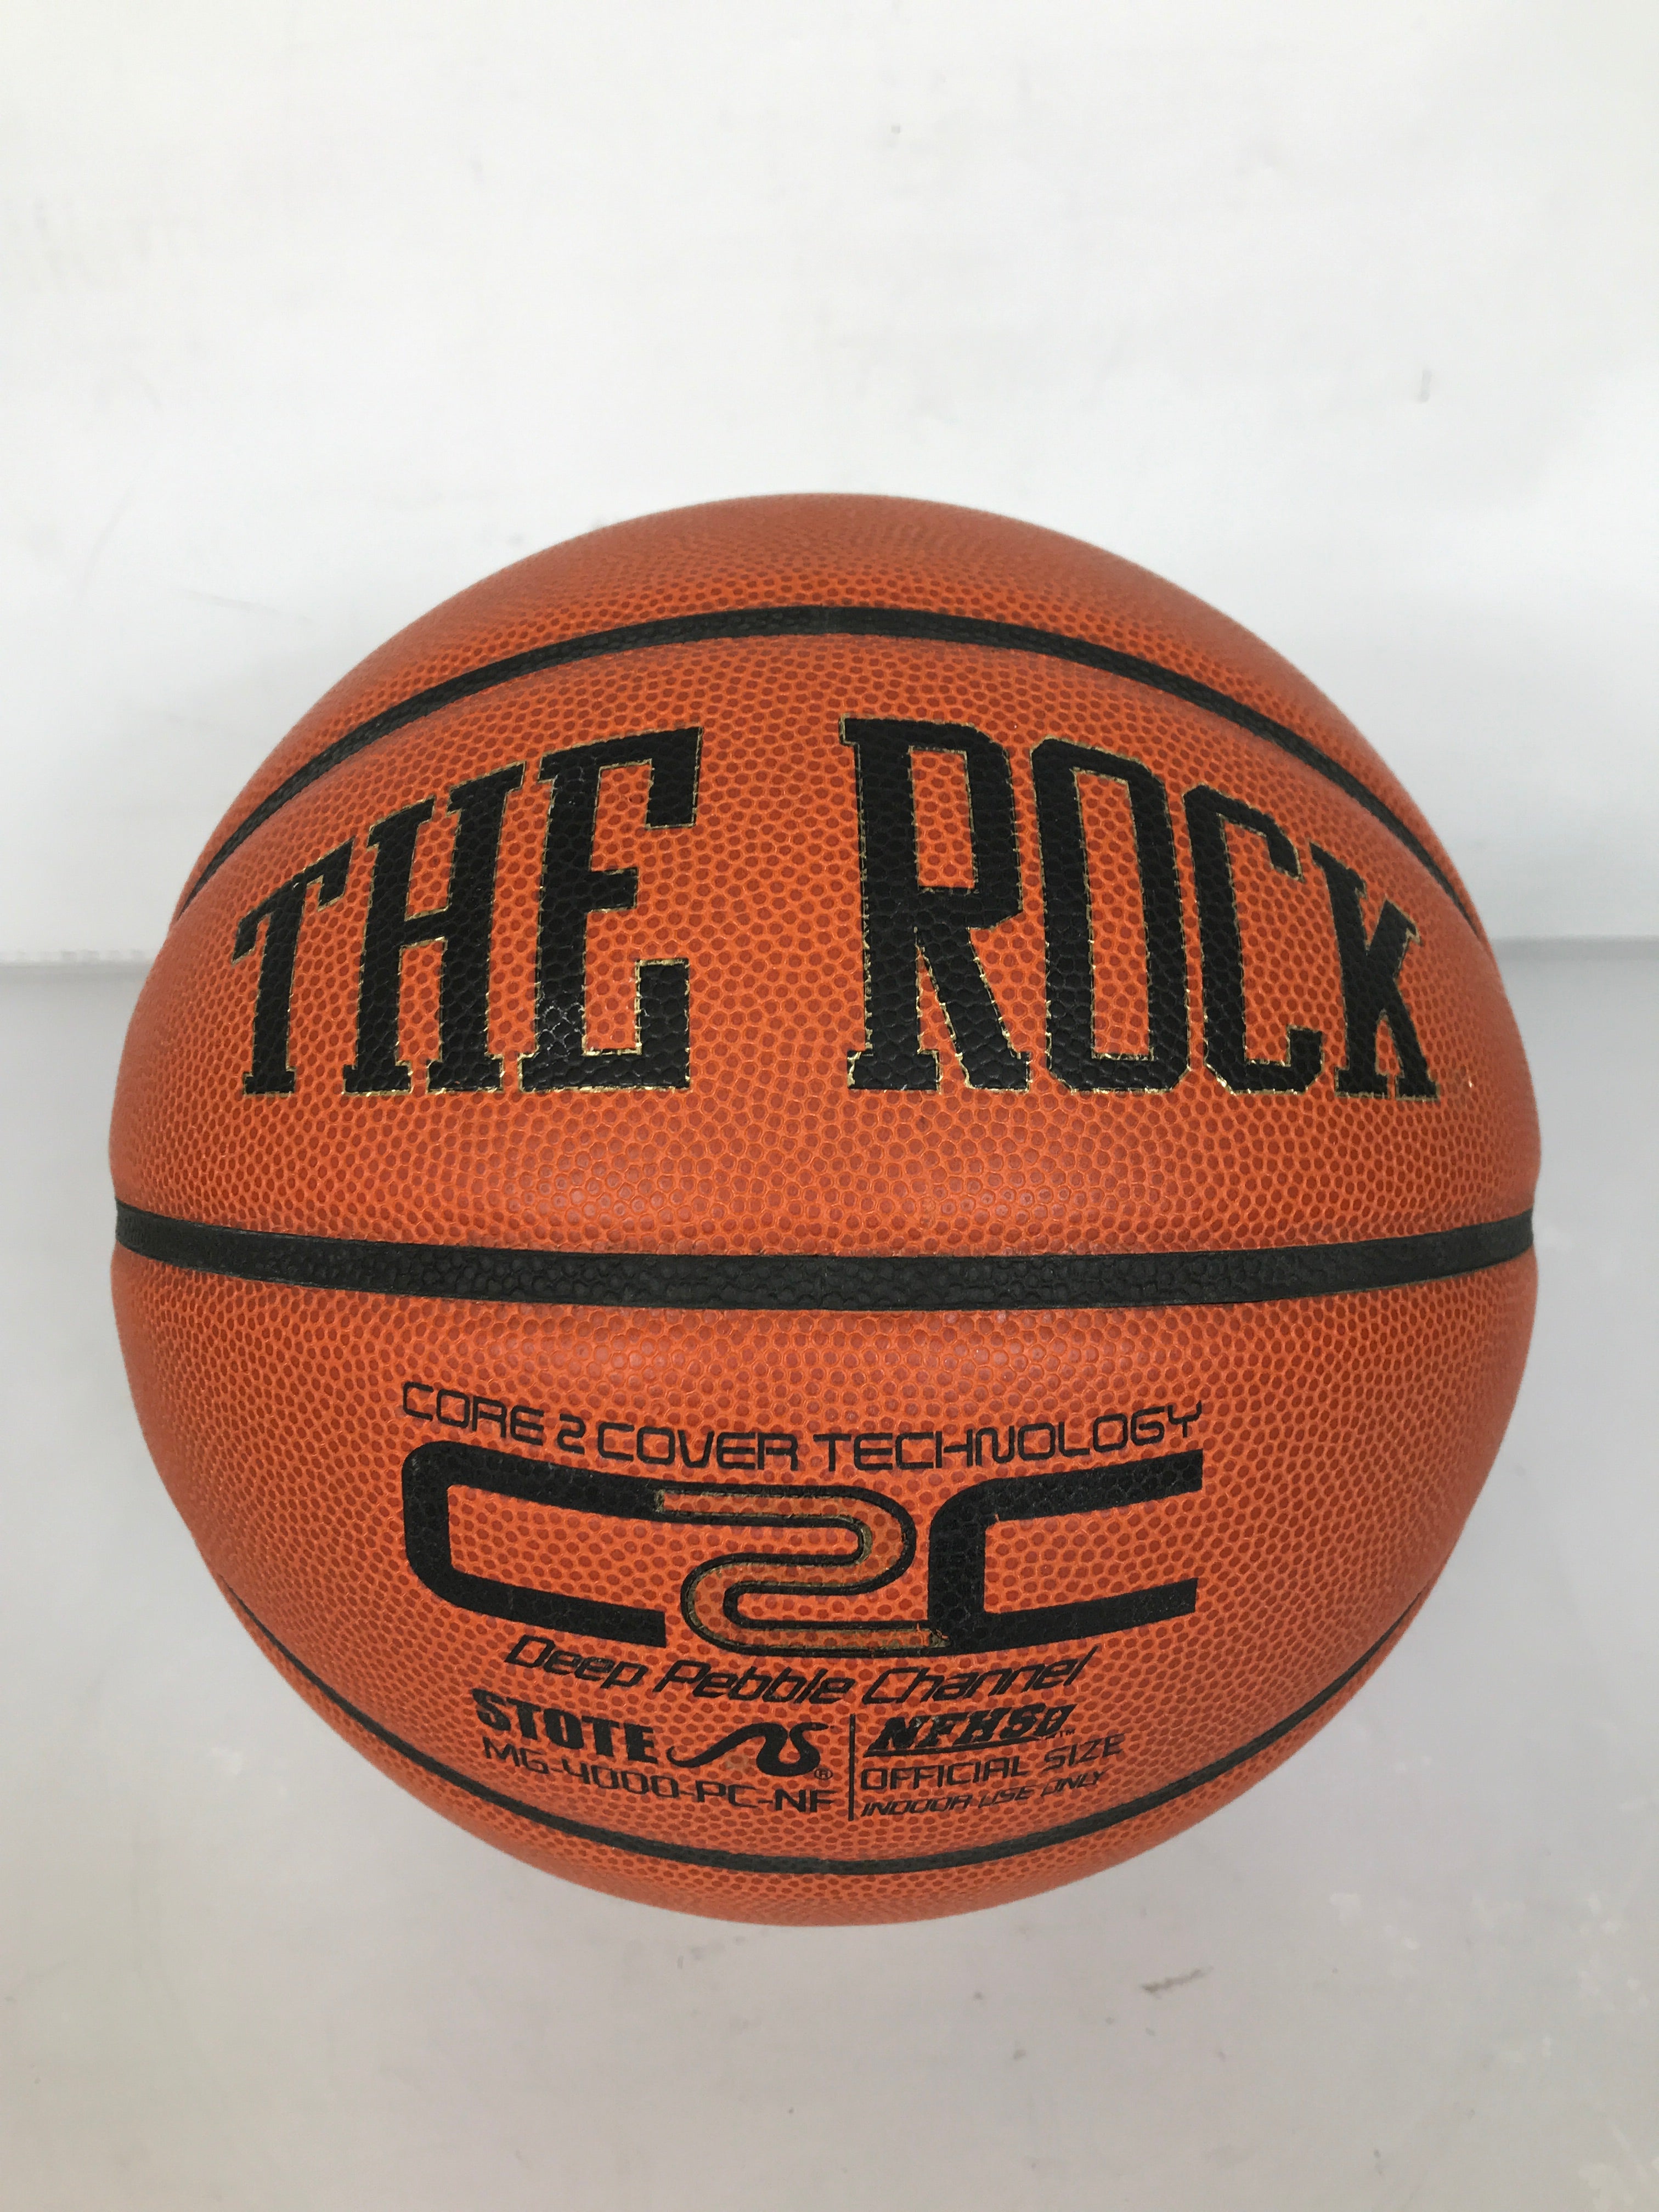 The Rock C2C Technology Indoor Basketball Men's Size 7